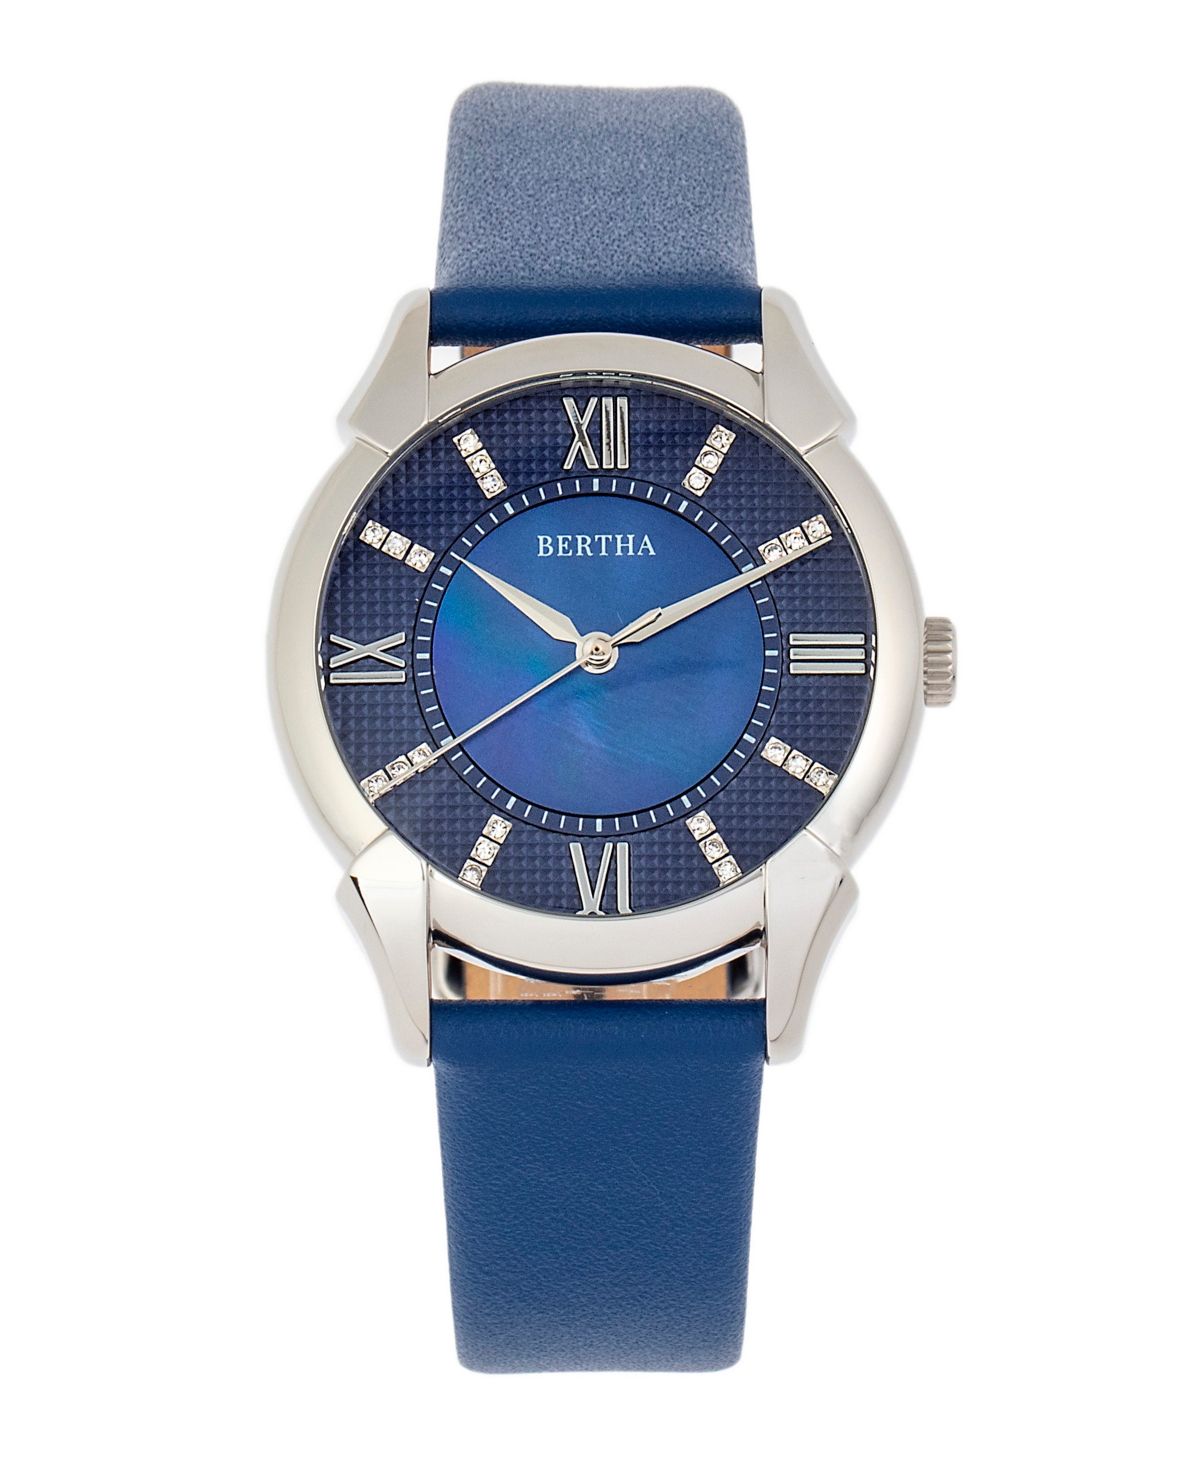 Bertha Ida Black or Blue or Green or Purple or Beige or Pink Leather Band Watch, 36mm